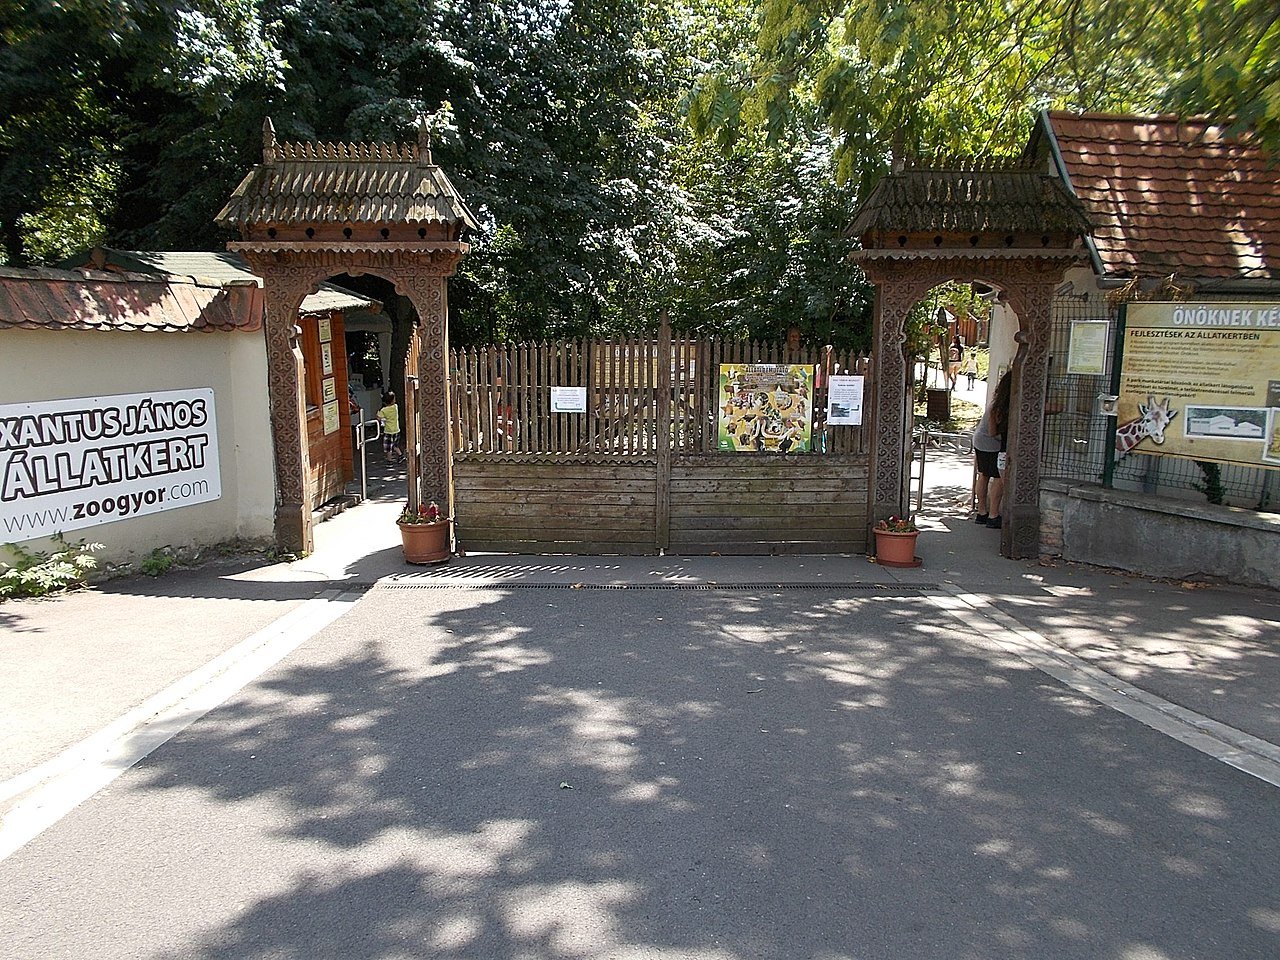 Xantus János Állatkert zoo, Best Places to Visit in Gyor